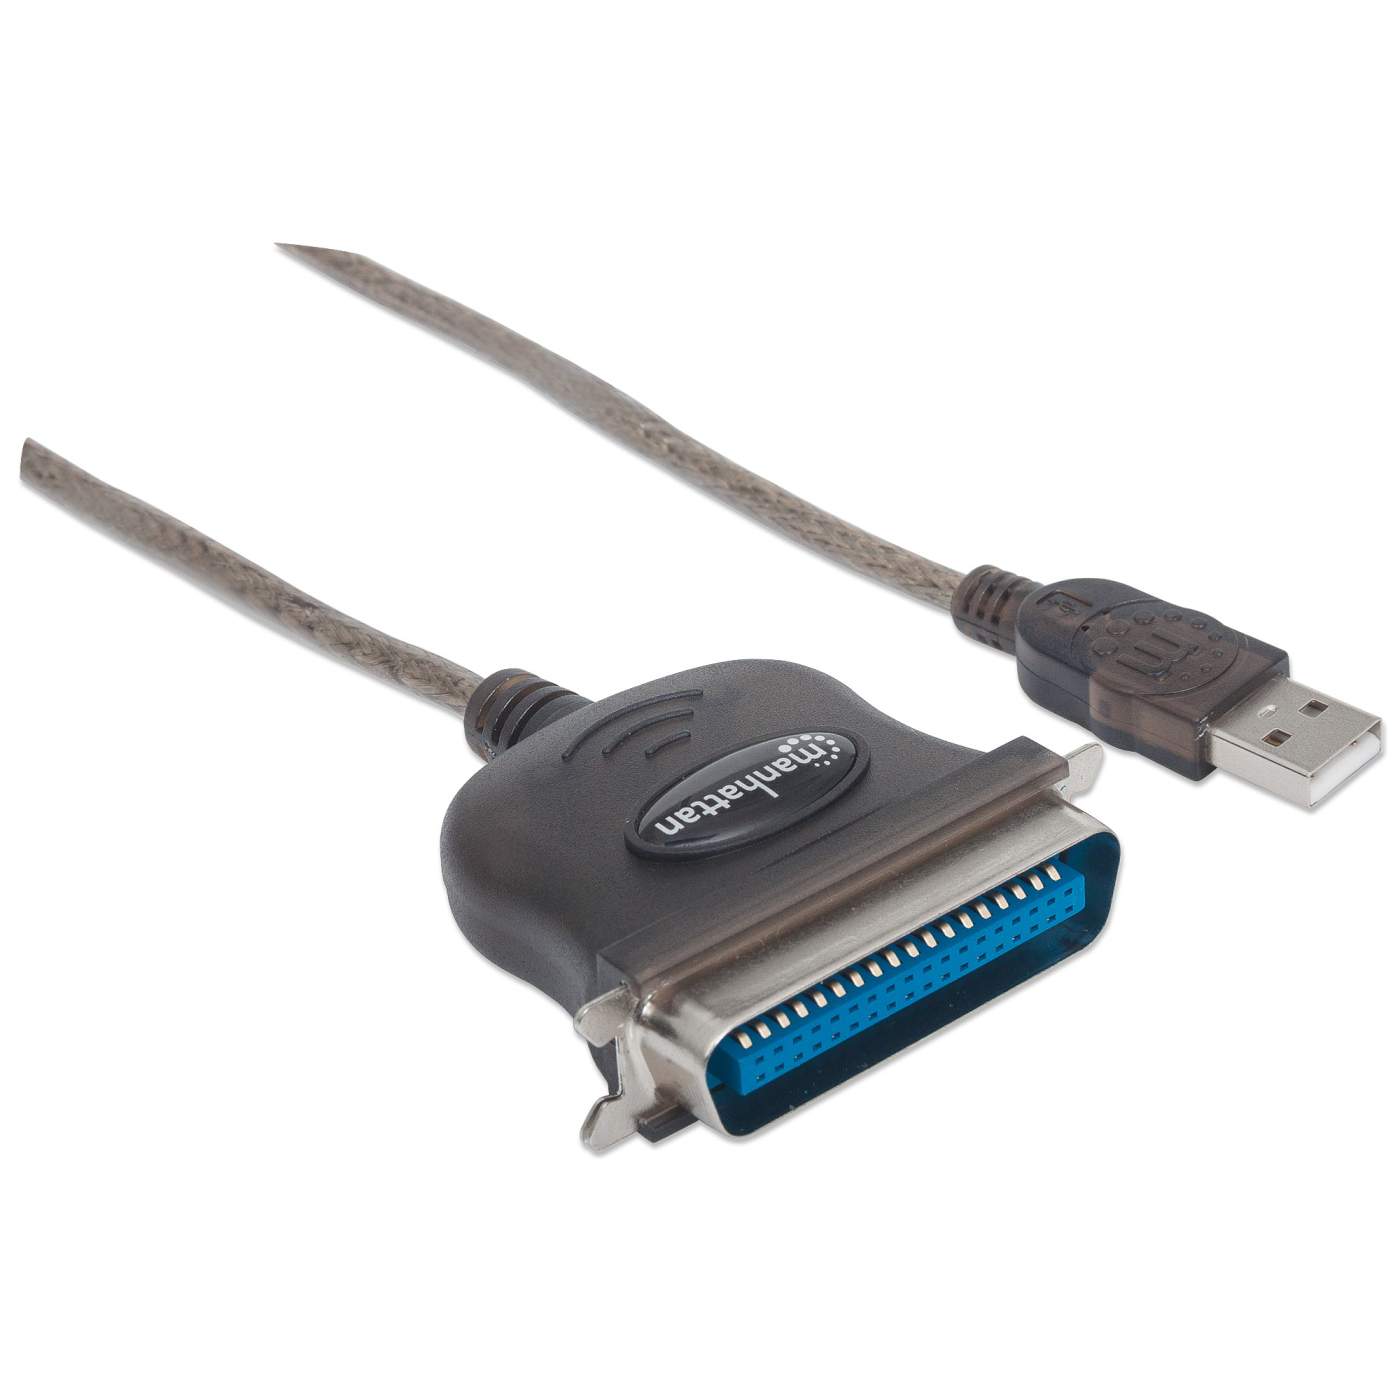 Full-Speed USB Cen36 Parallel Printer